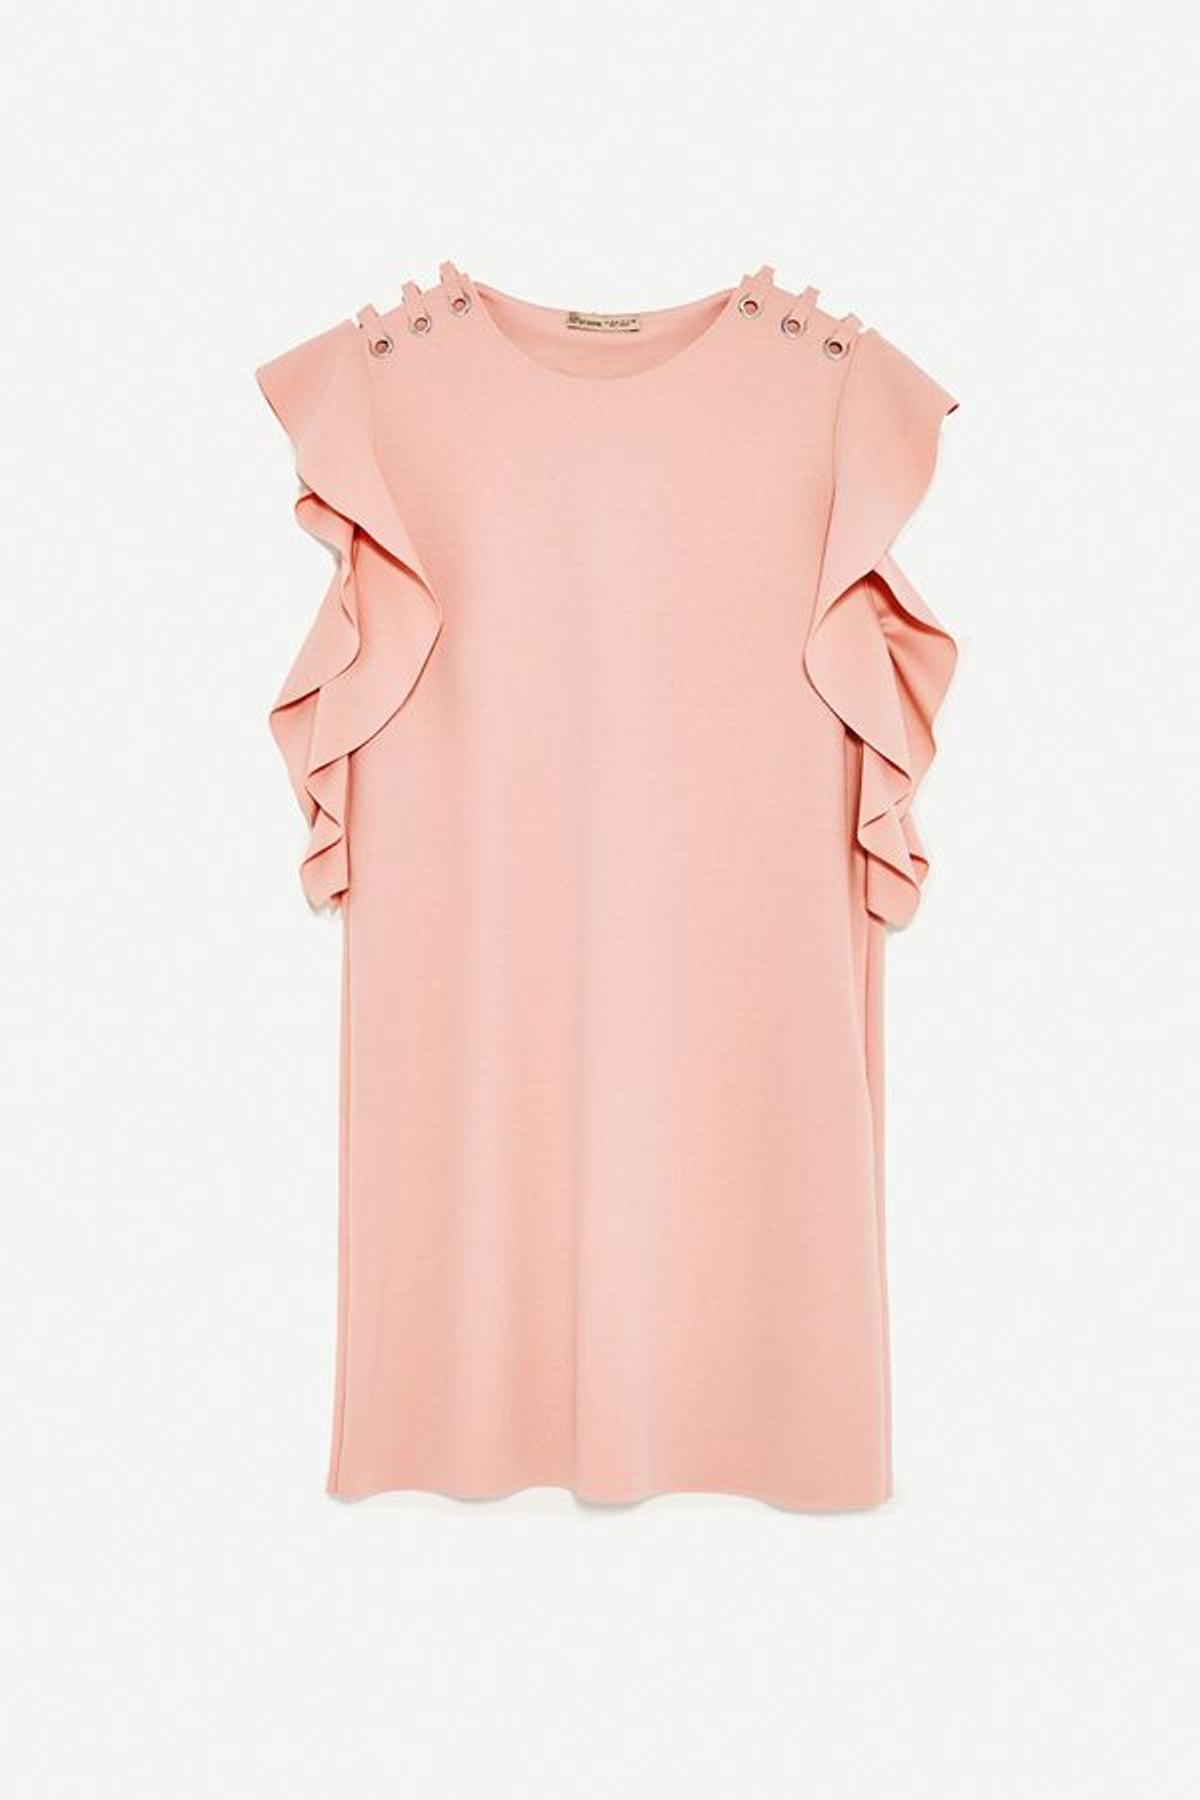 Vestidos de invitada por menos de 50 euros: rosa, de Zara